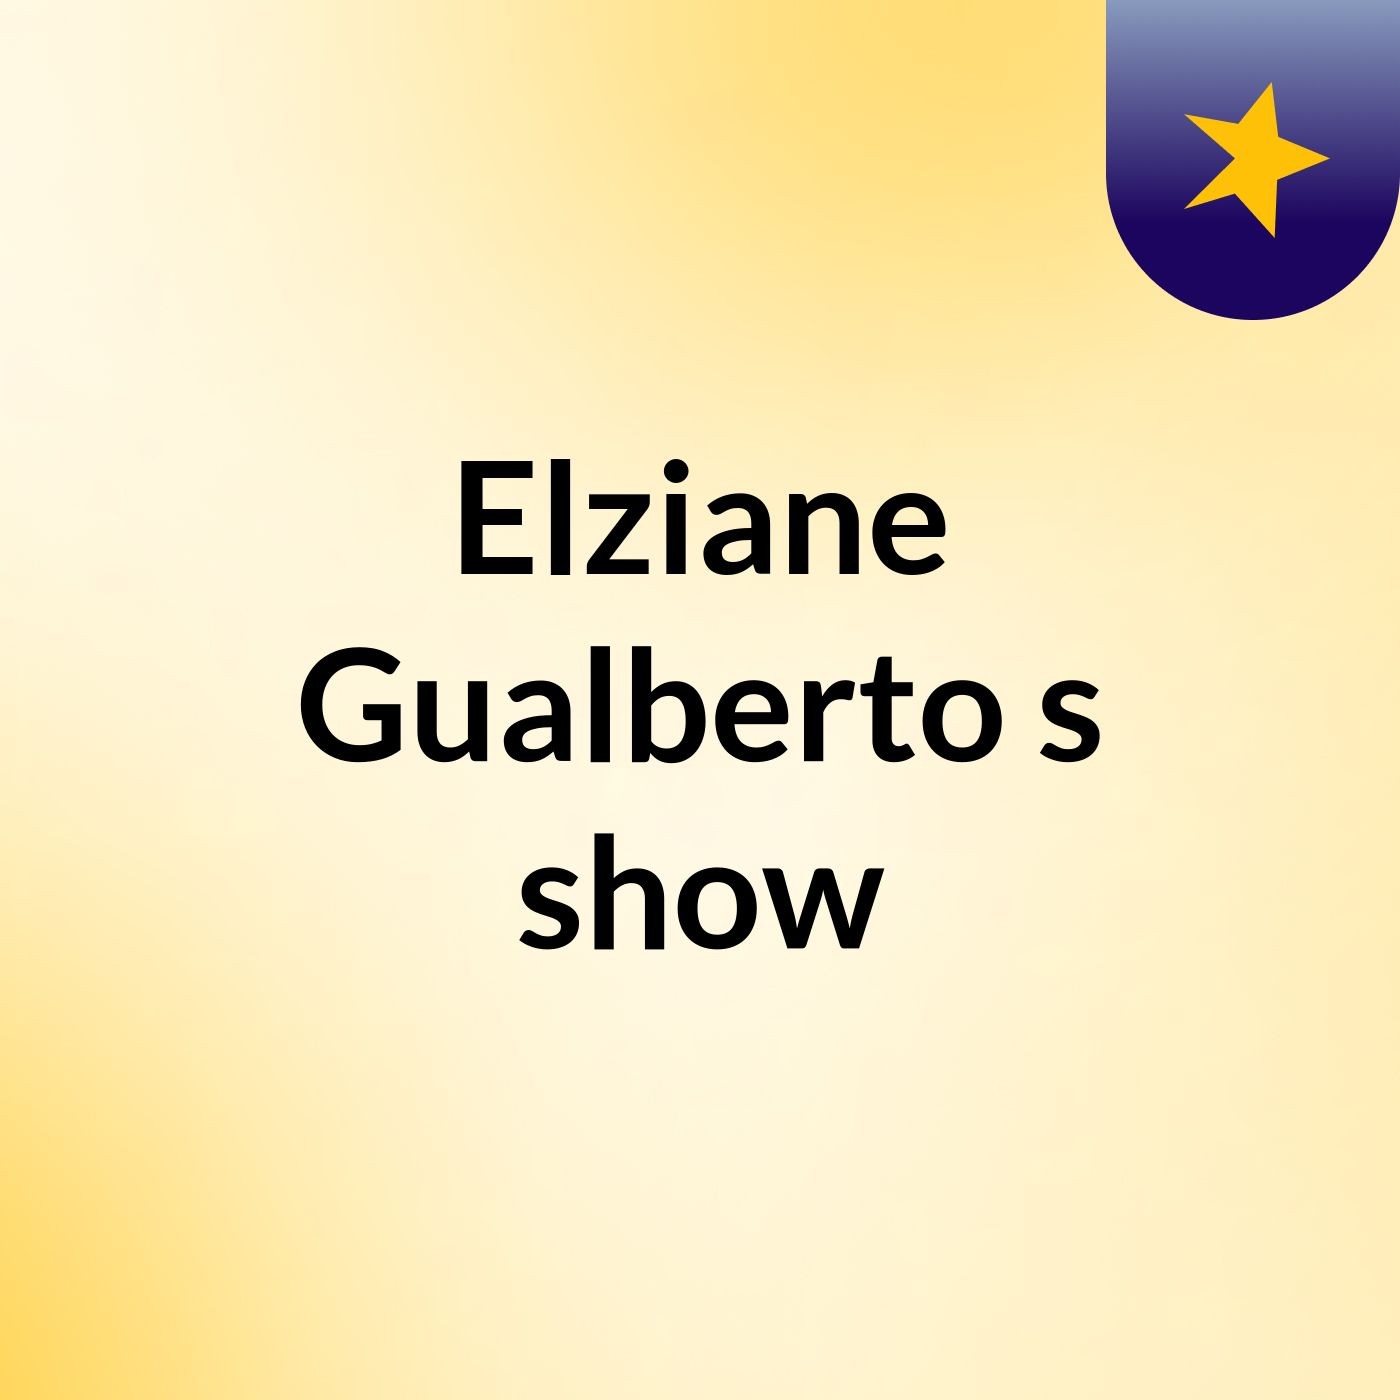 Elziane Gualberto's show